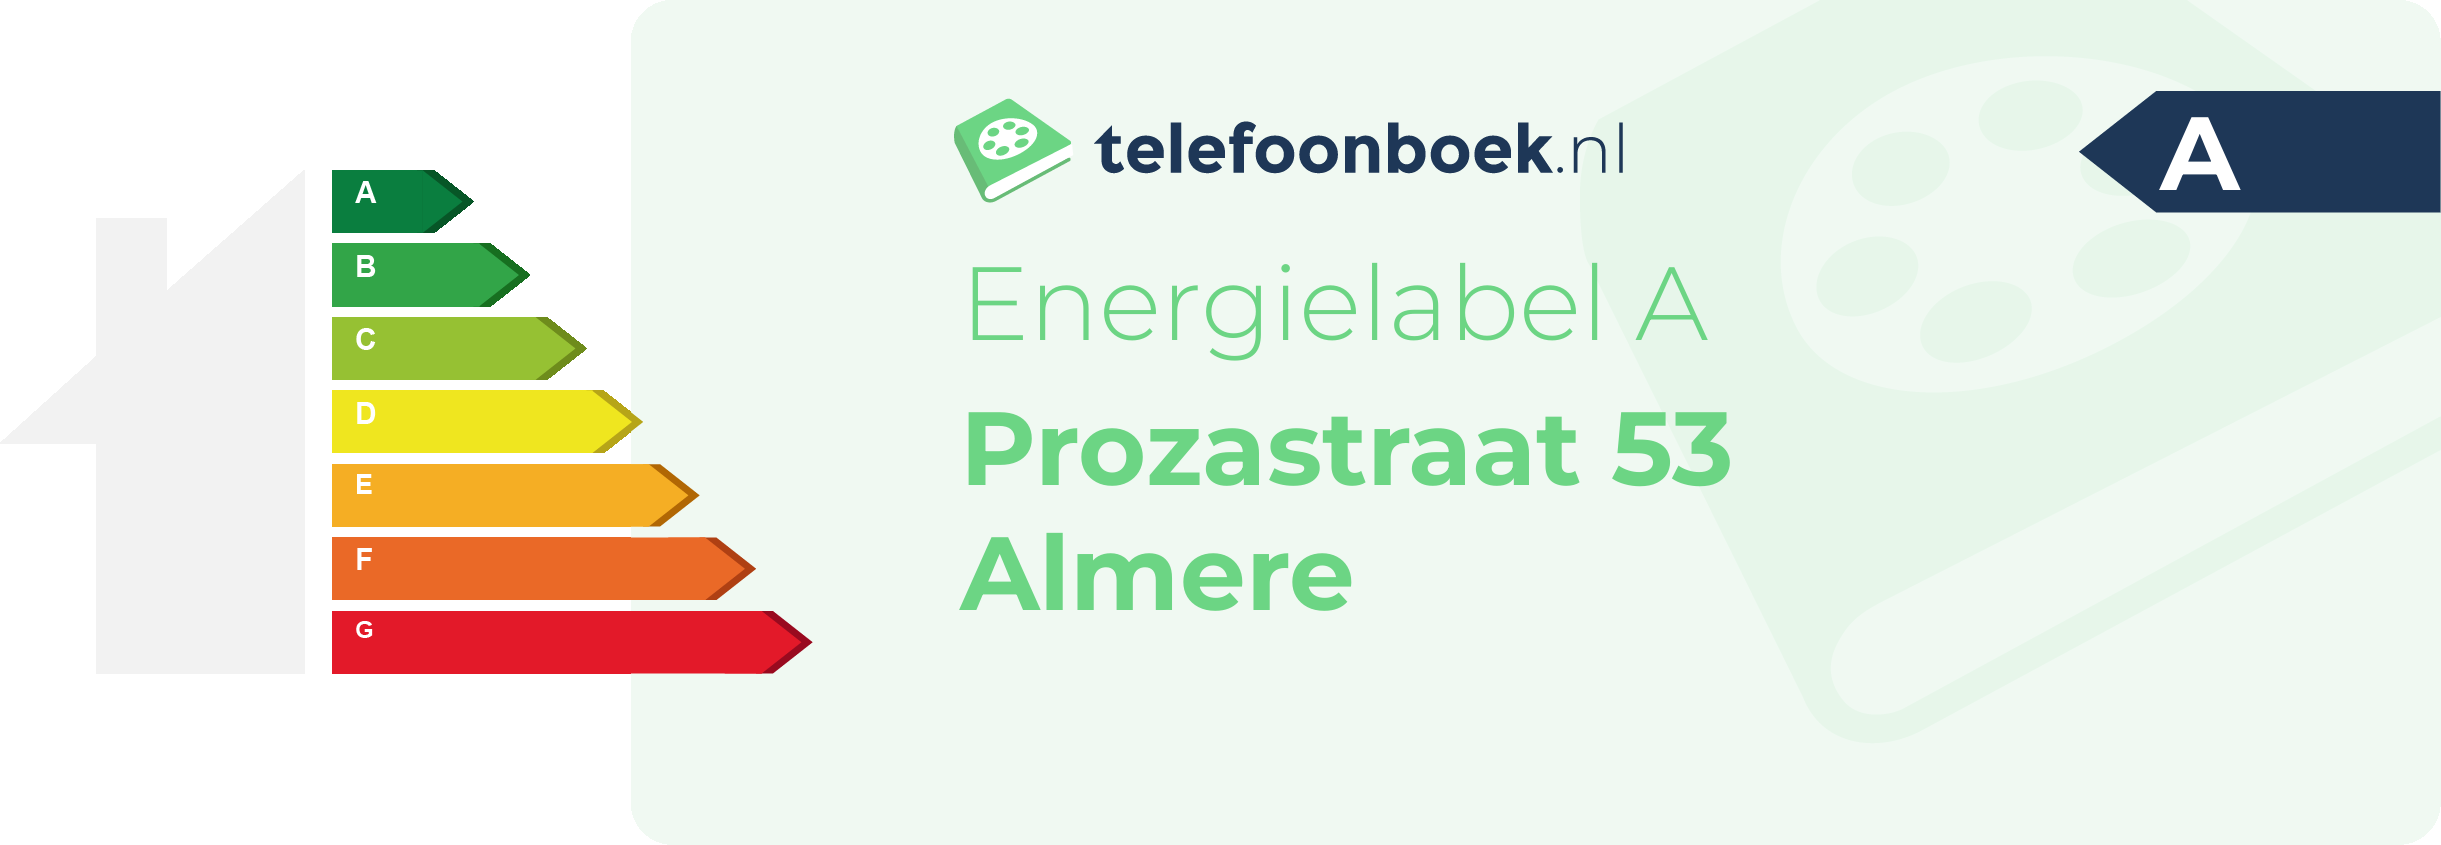 Energielabel Prozastraat 53 Almere